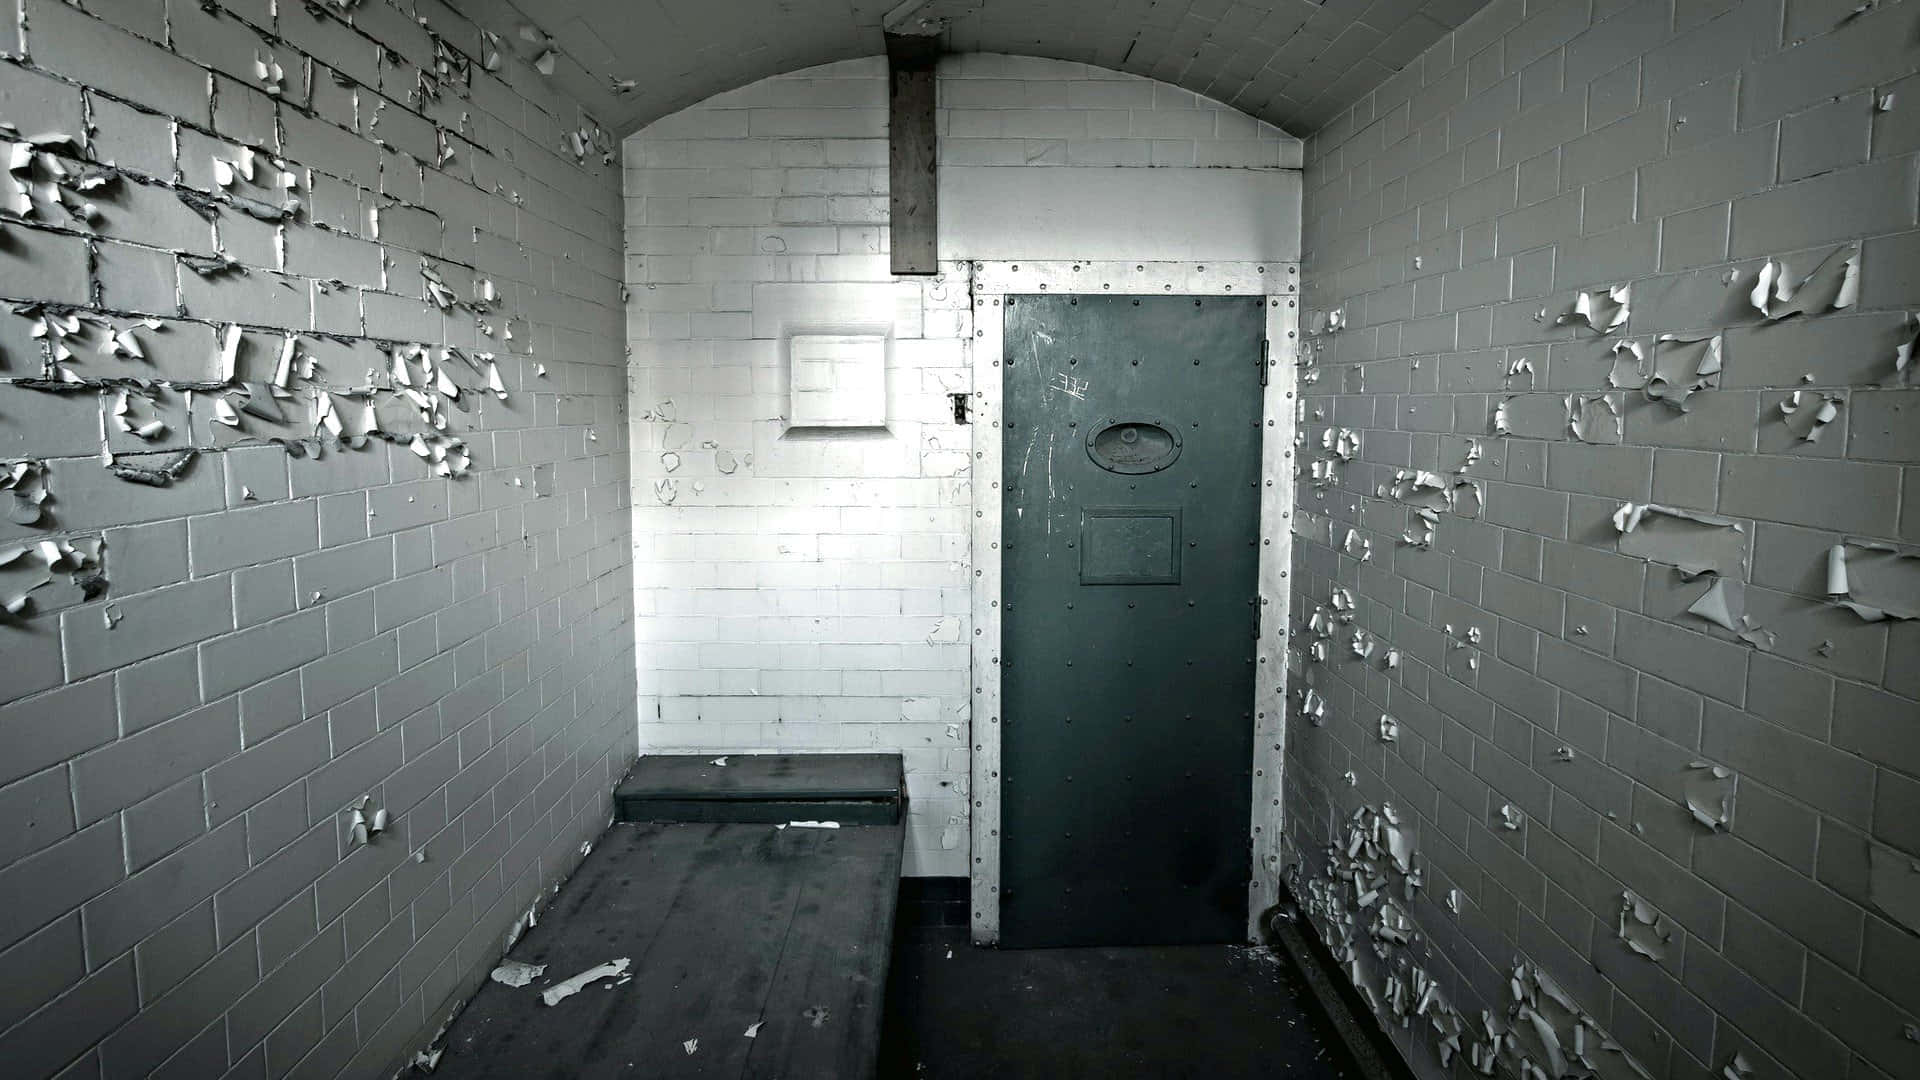 Guard Tower Inside a Prison